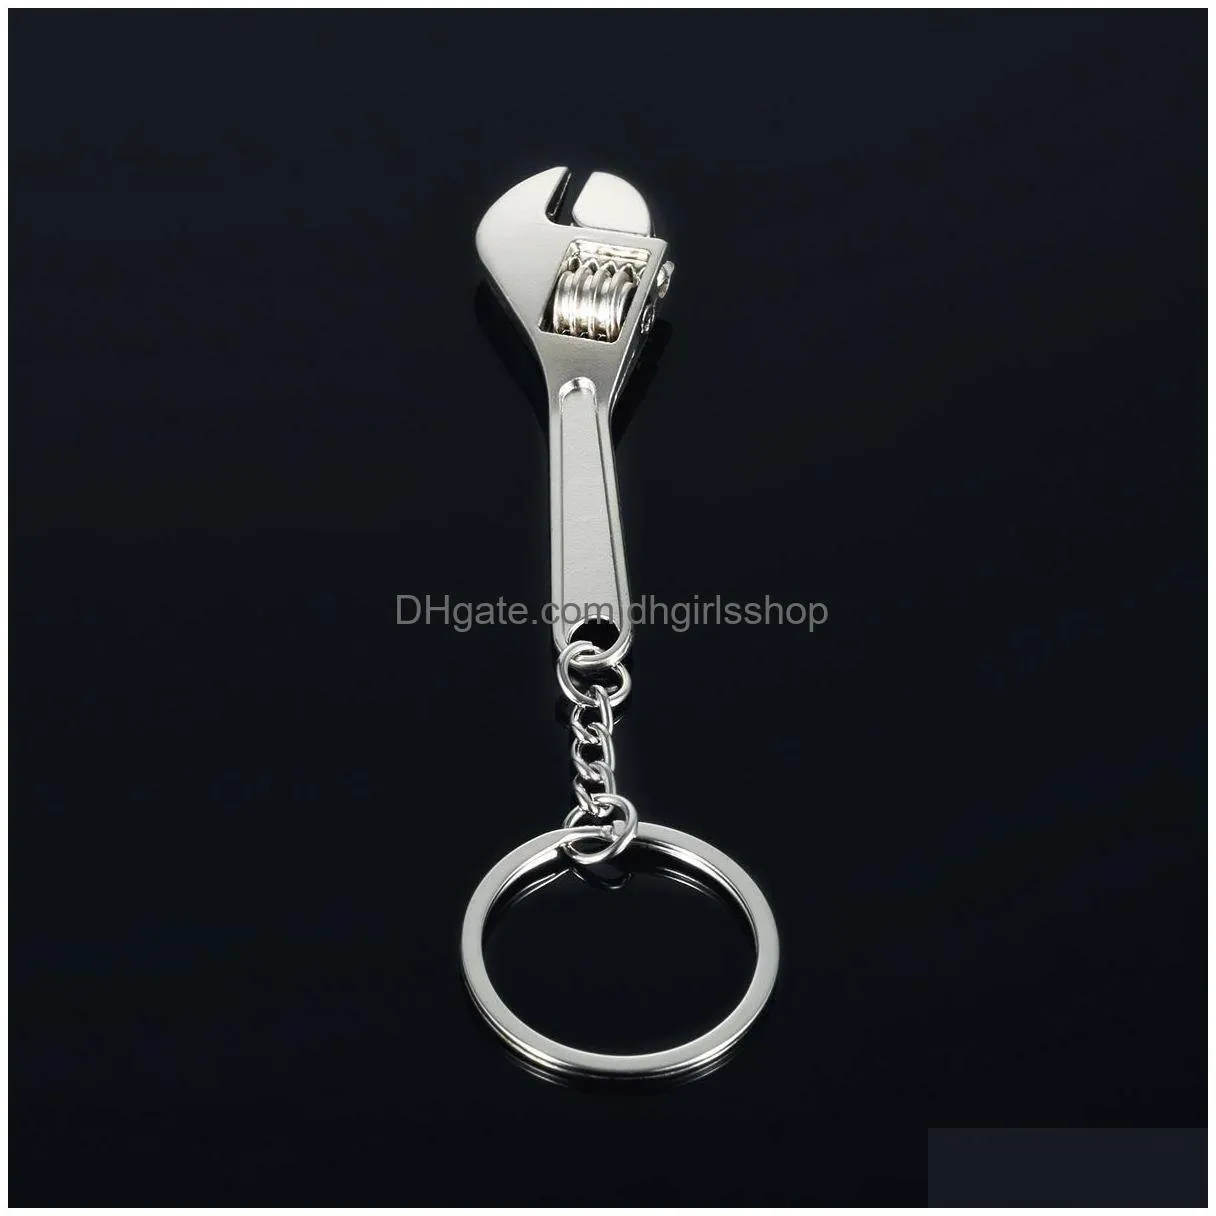 Key Rings Metal Wrench Key Ring Mini Monkey Keychain Holder Hand Tool Rings Fashion Jewelry Handbag Jewelry Dh3Ix